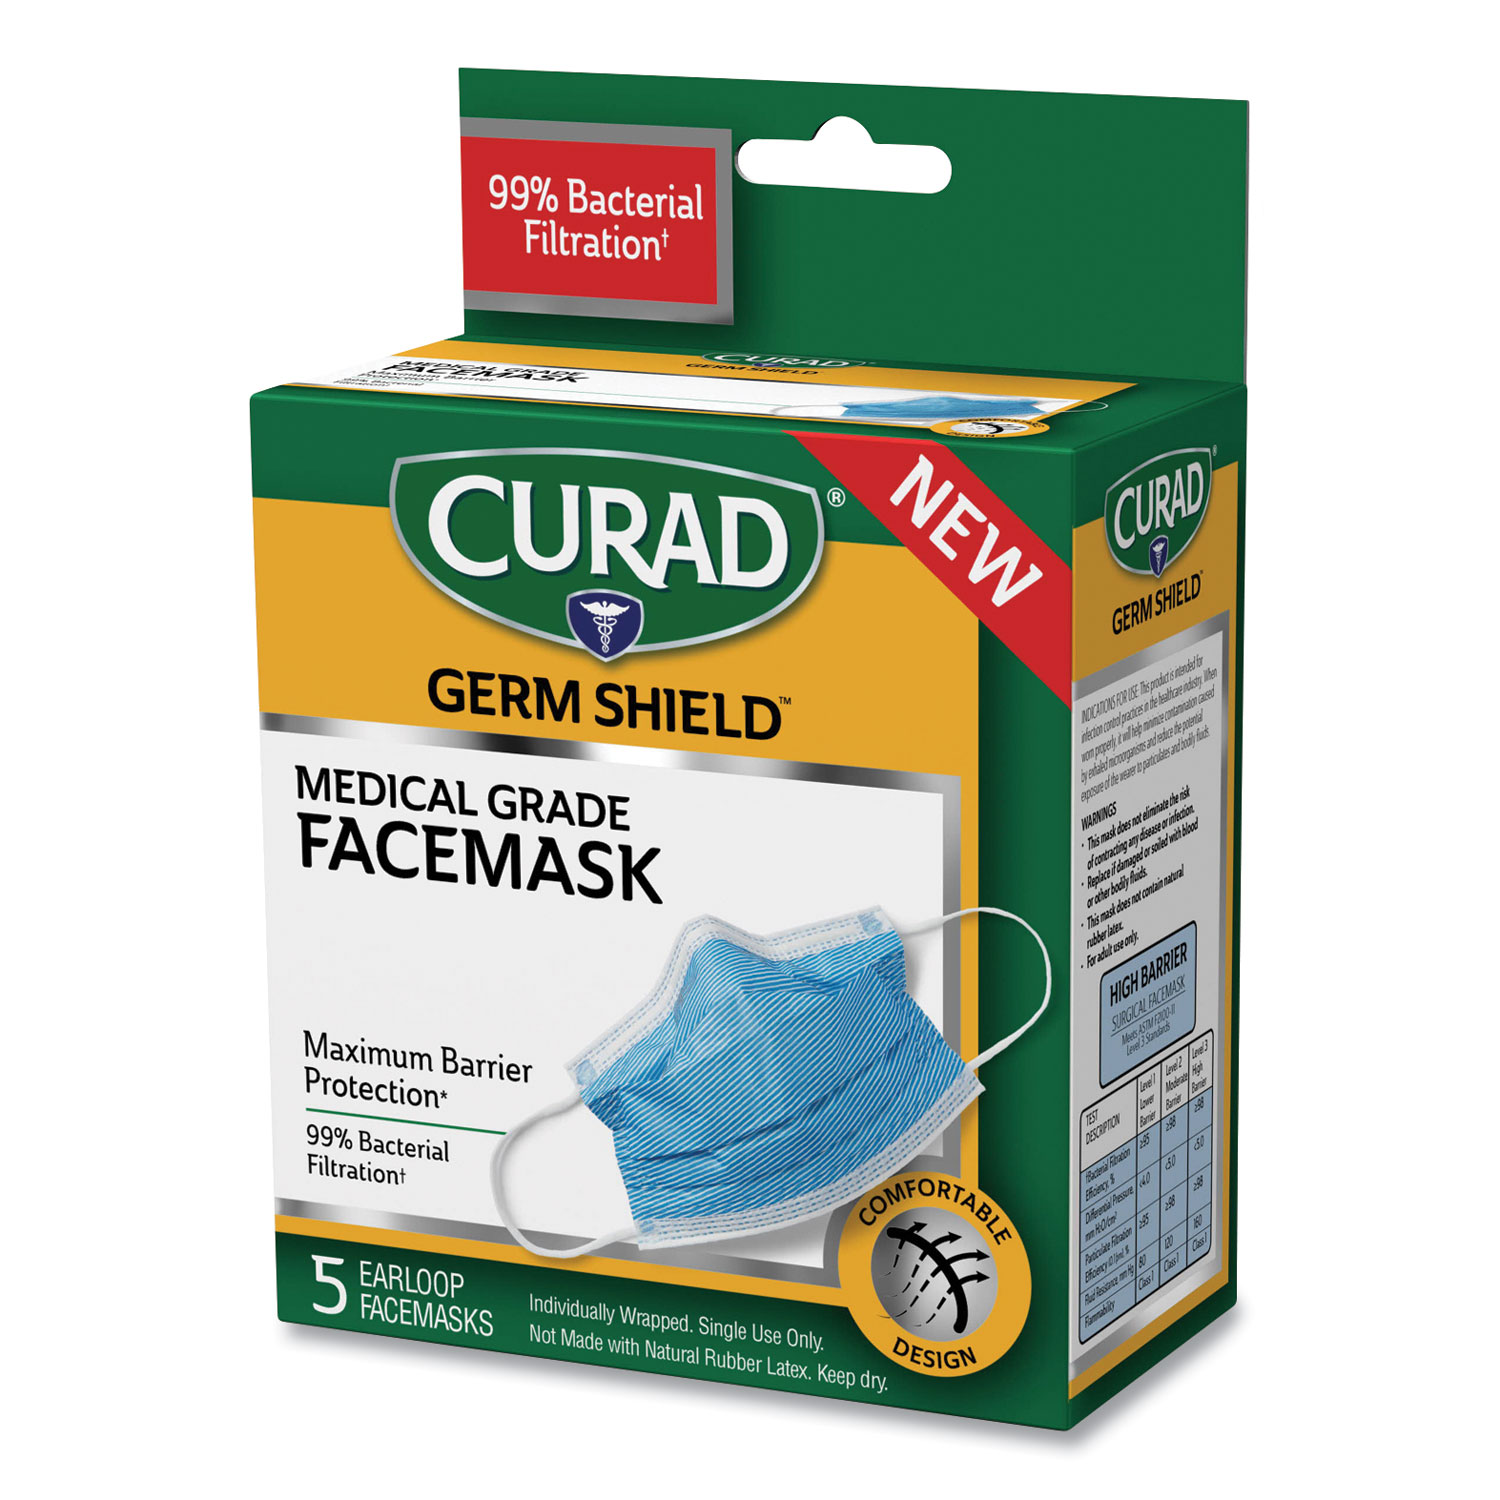  Curad CUR384S Germ Shield Medical Grade Maximum Barrier Face Mask, Pleated, 10/Box (MIICUR812S) 